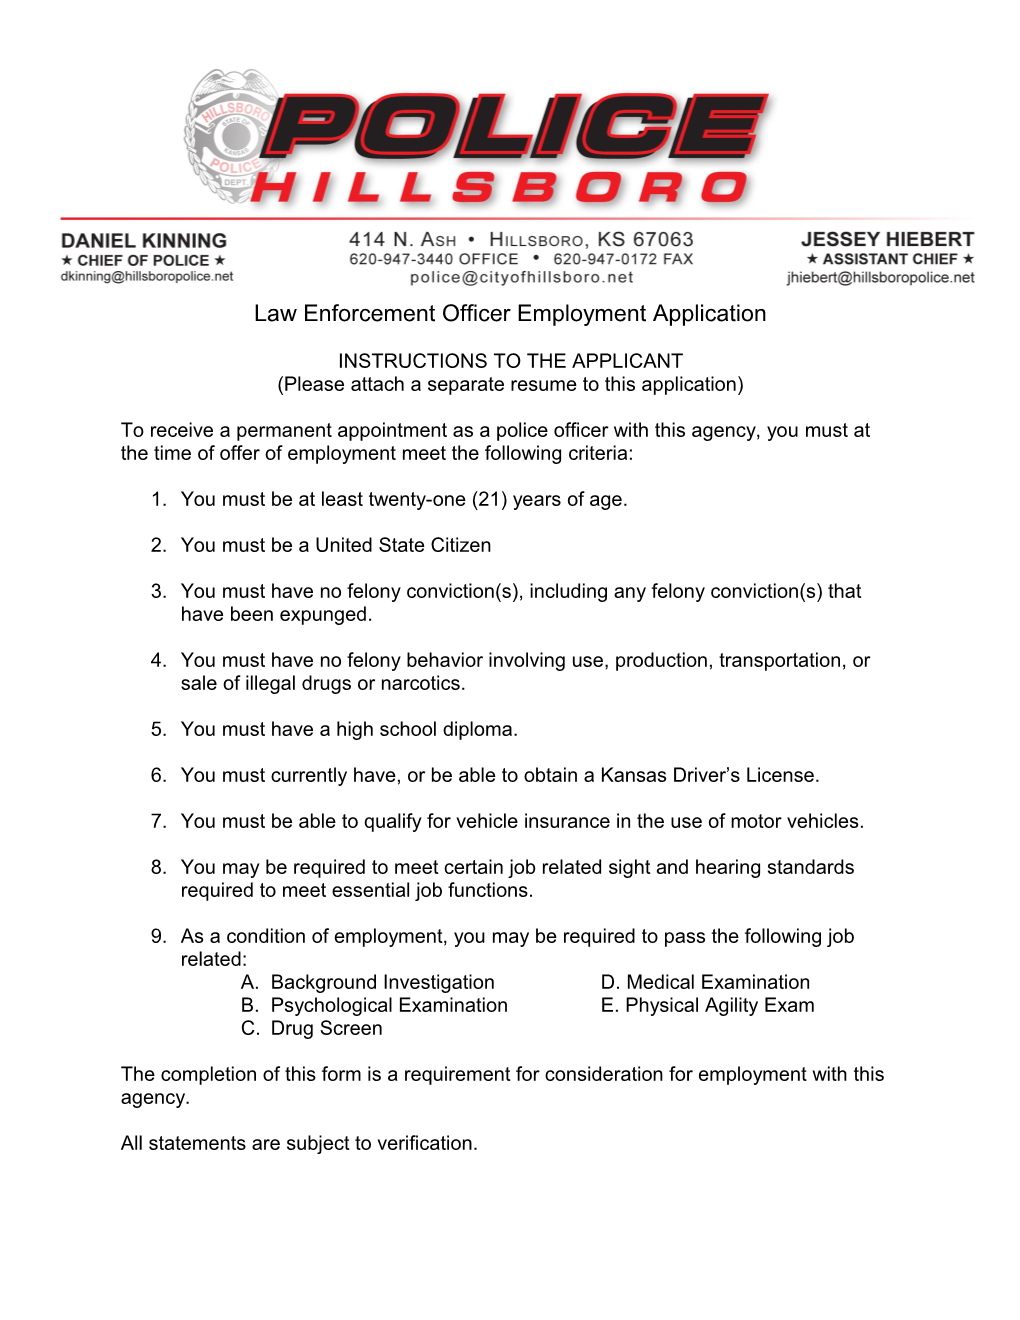 Hillsboro Police Department